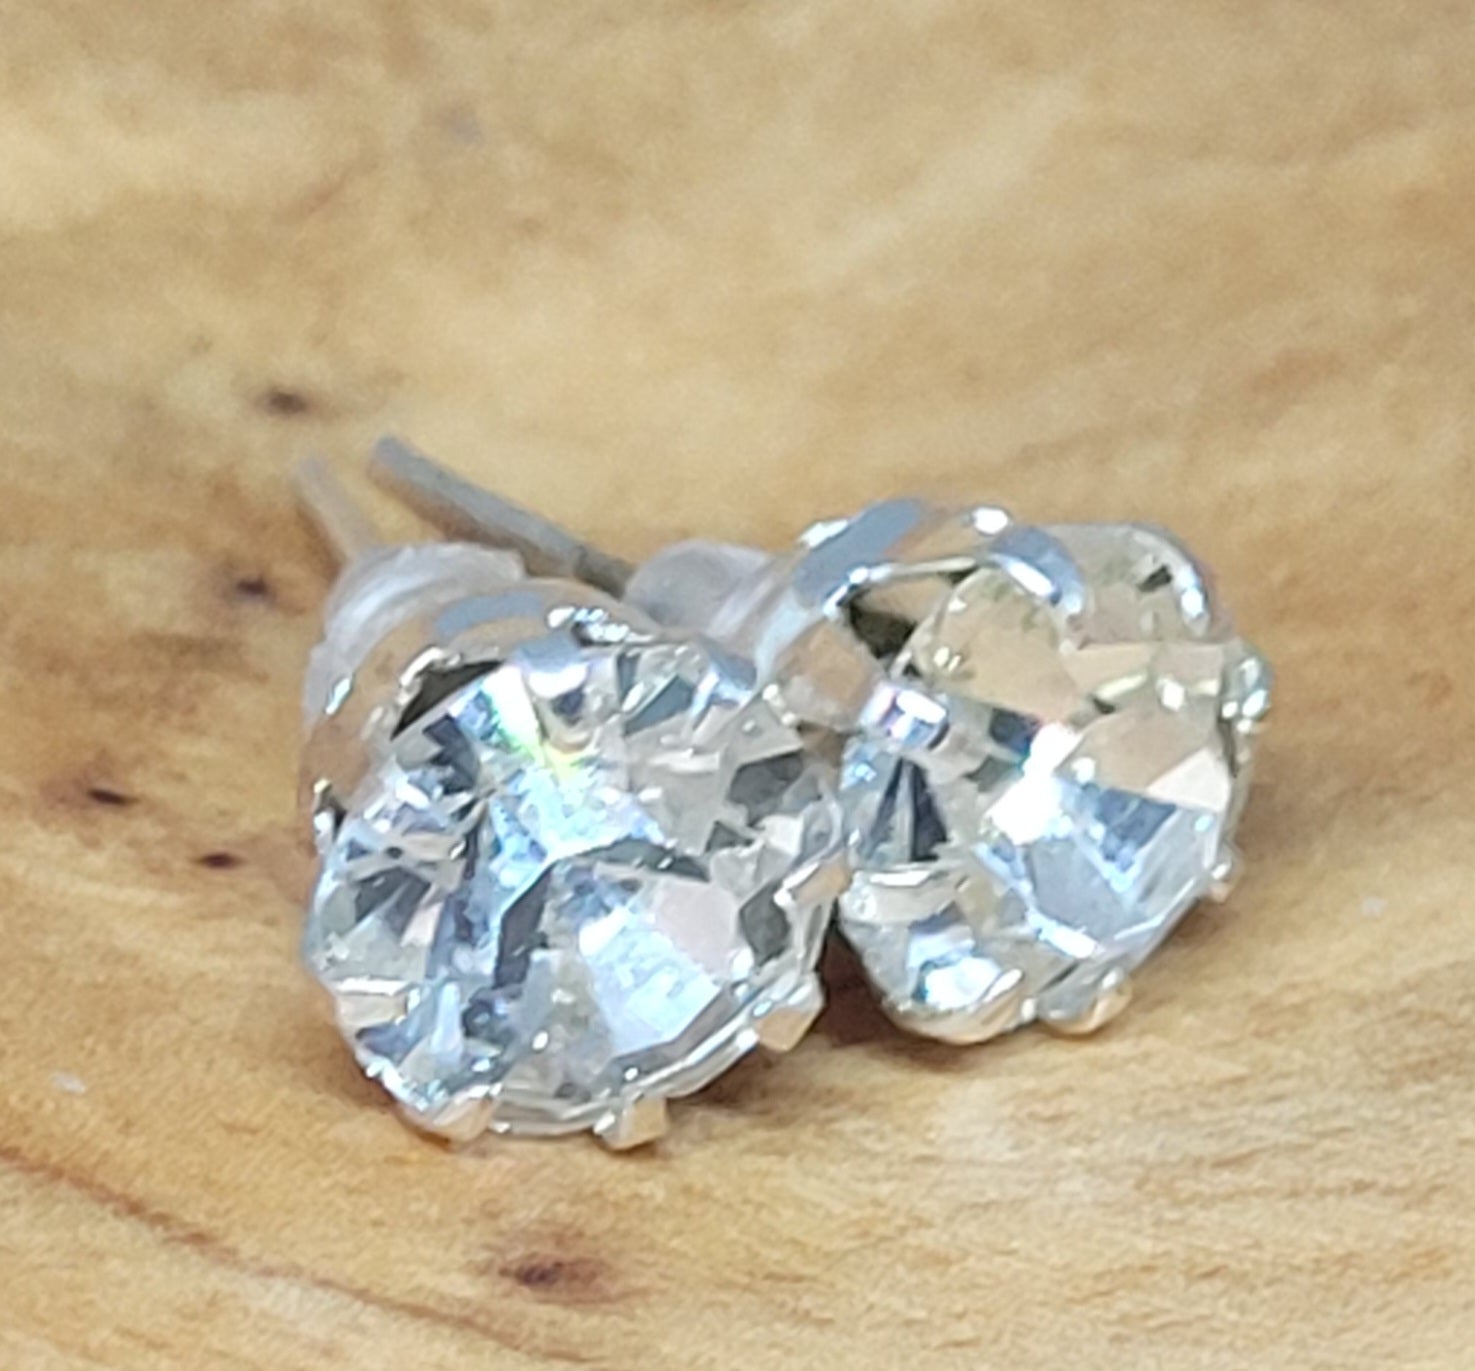 Large Faux Diamond Silver Prong Post Earrings